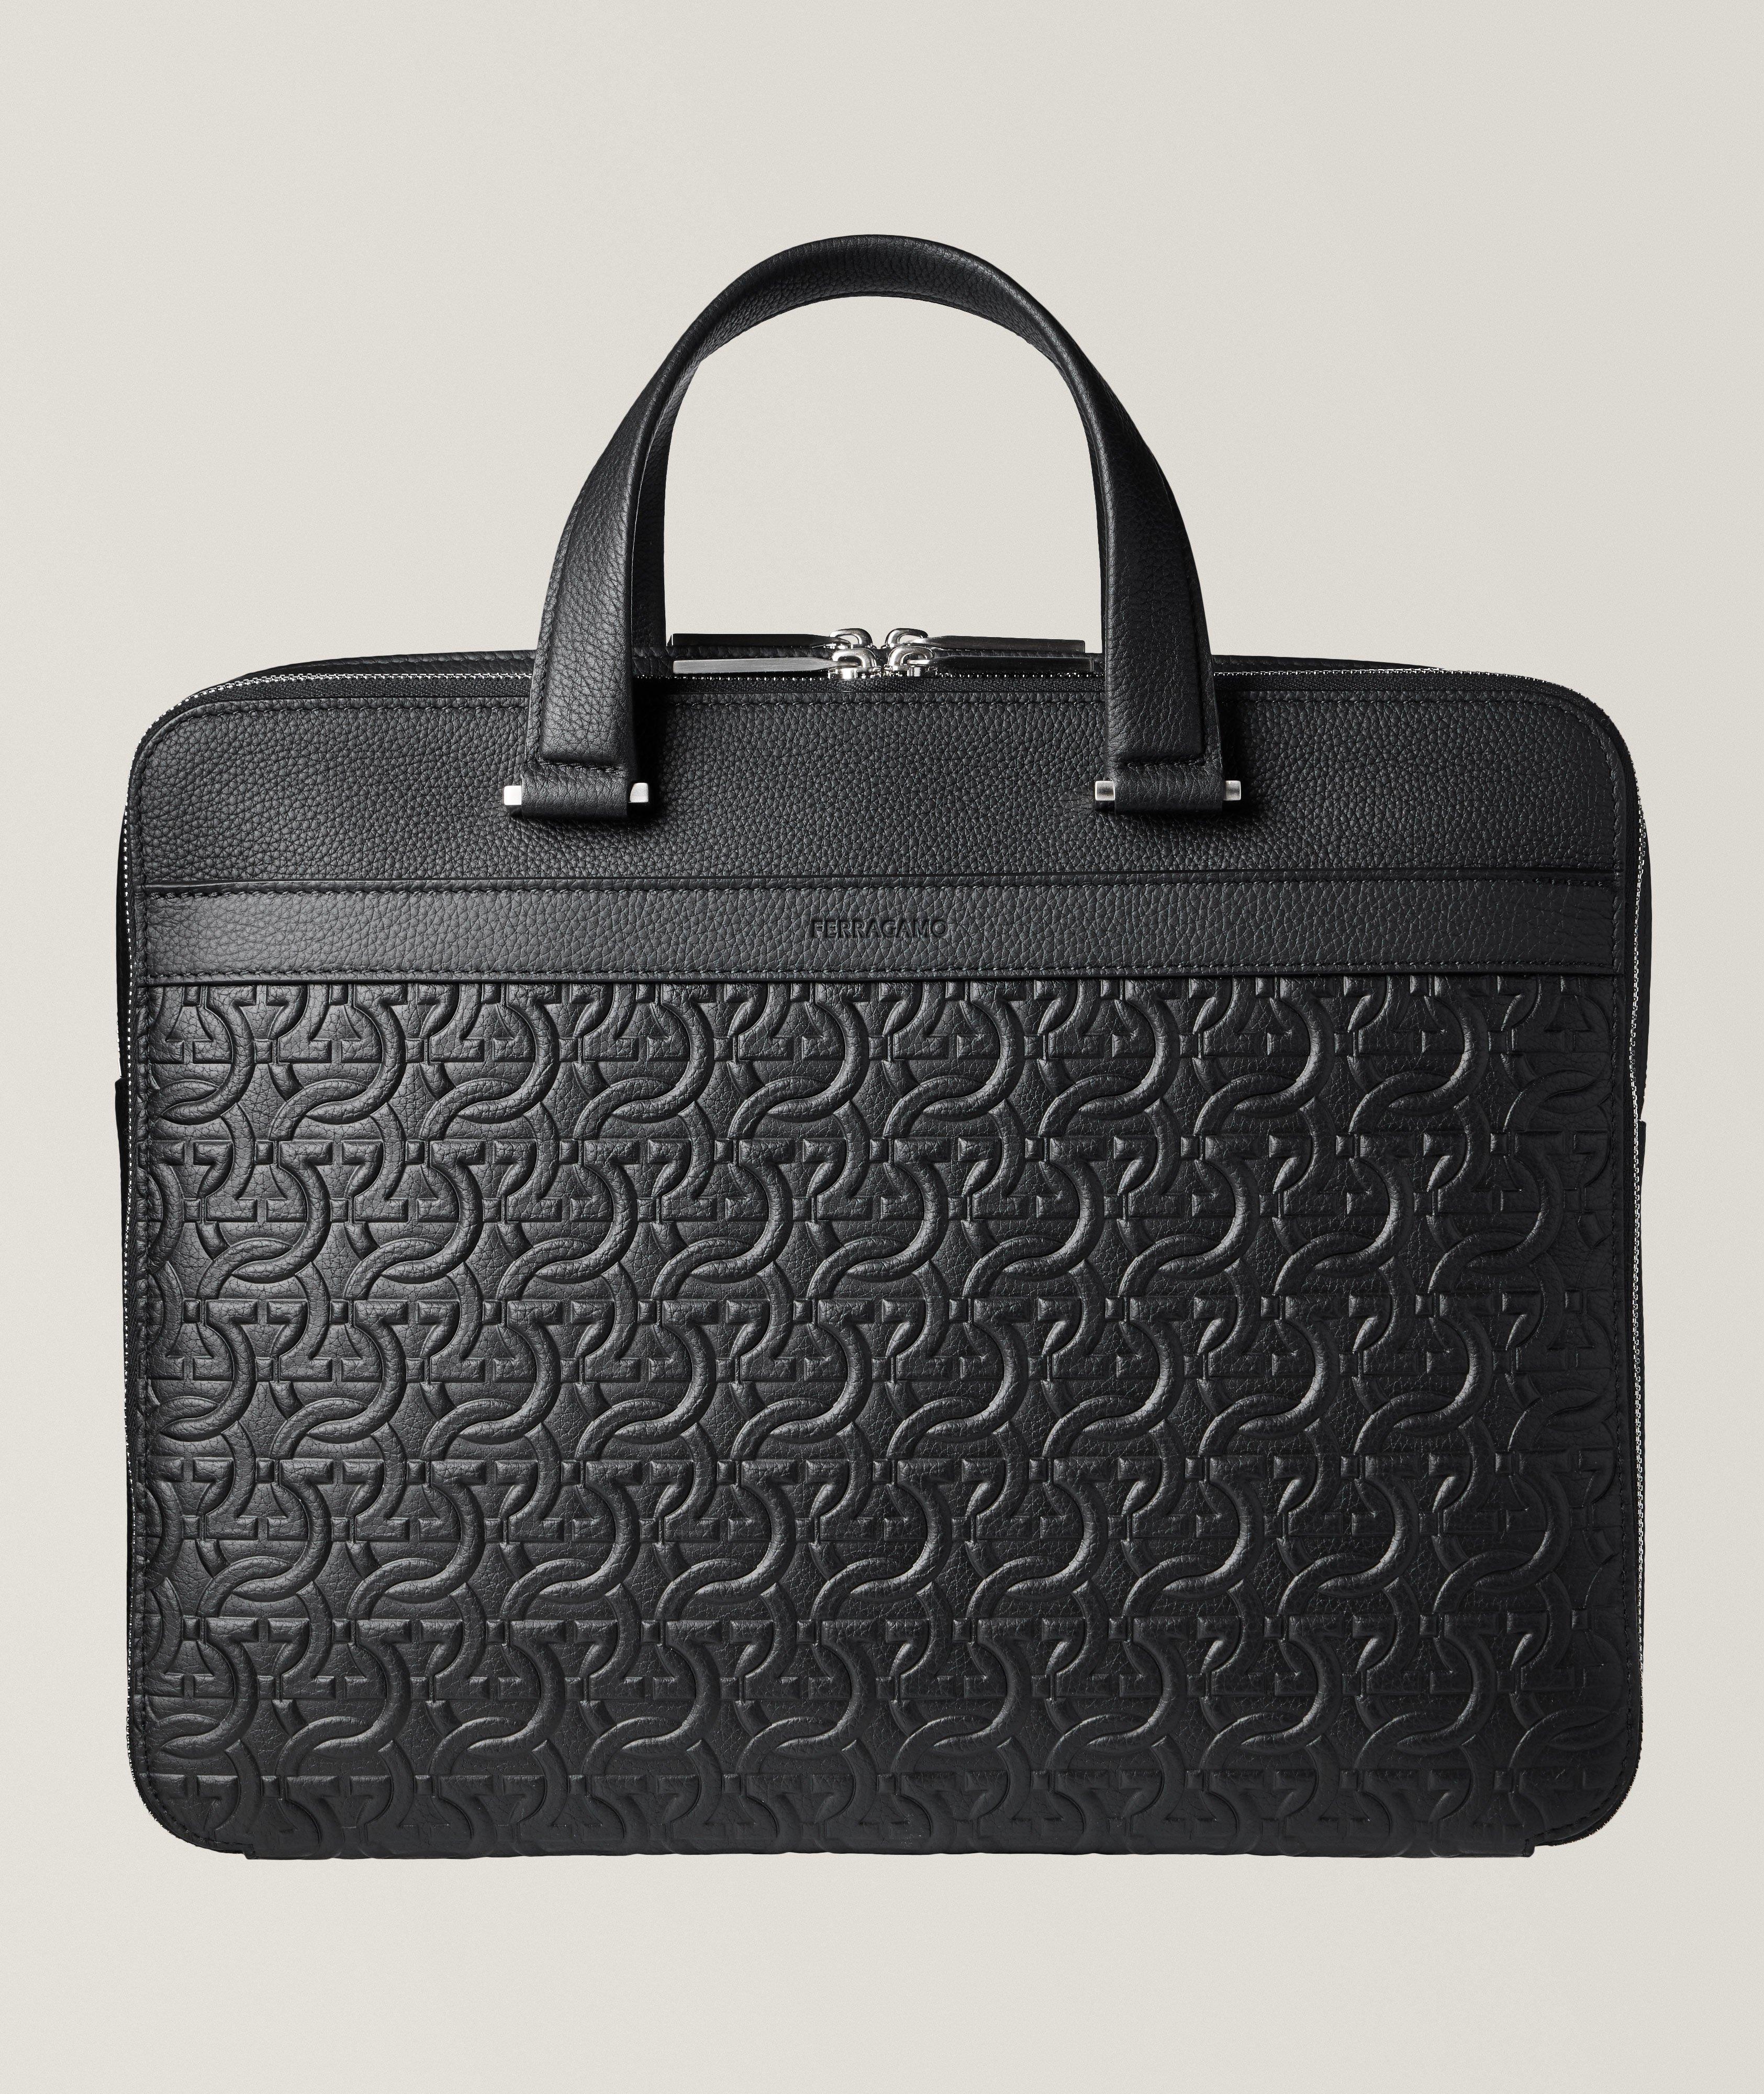 Gancio Monogram Embossed Calfskin Leather Briefcase image 0